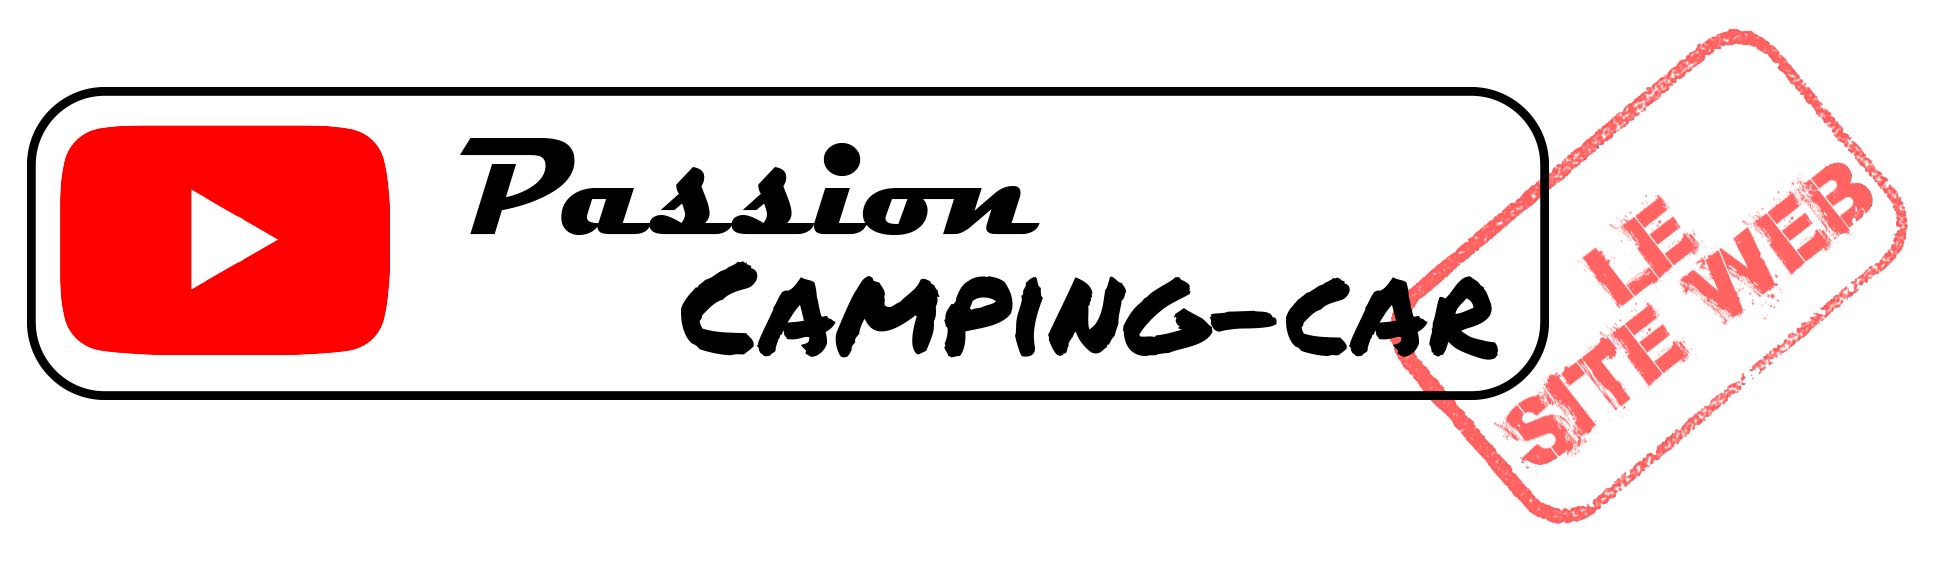 passion camping car